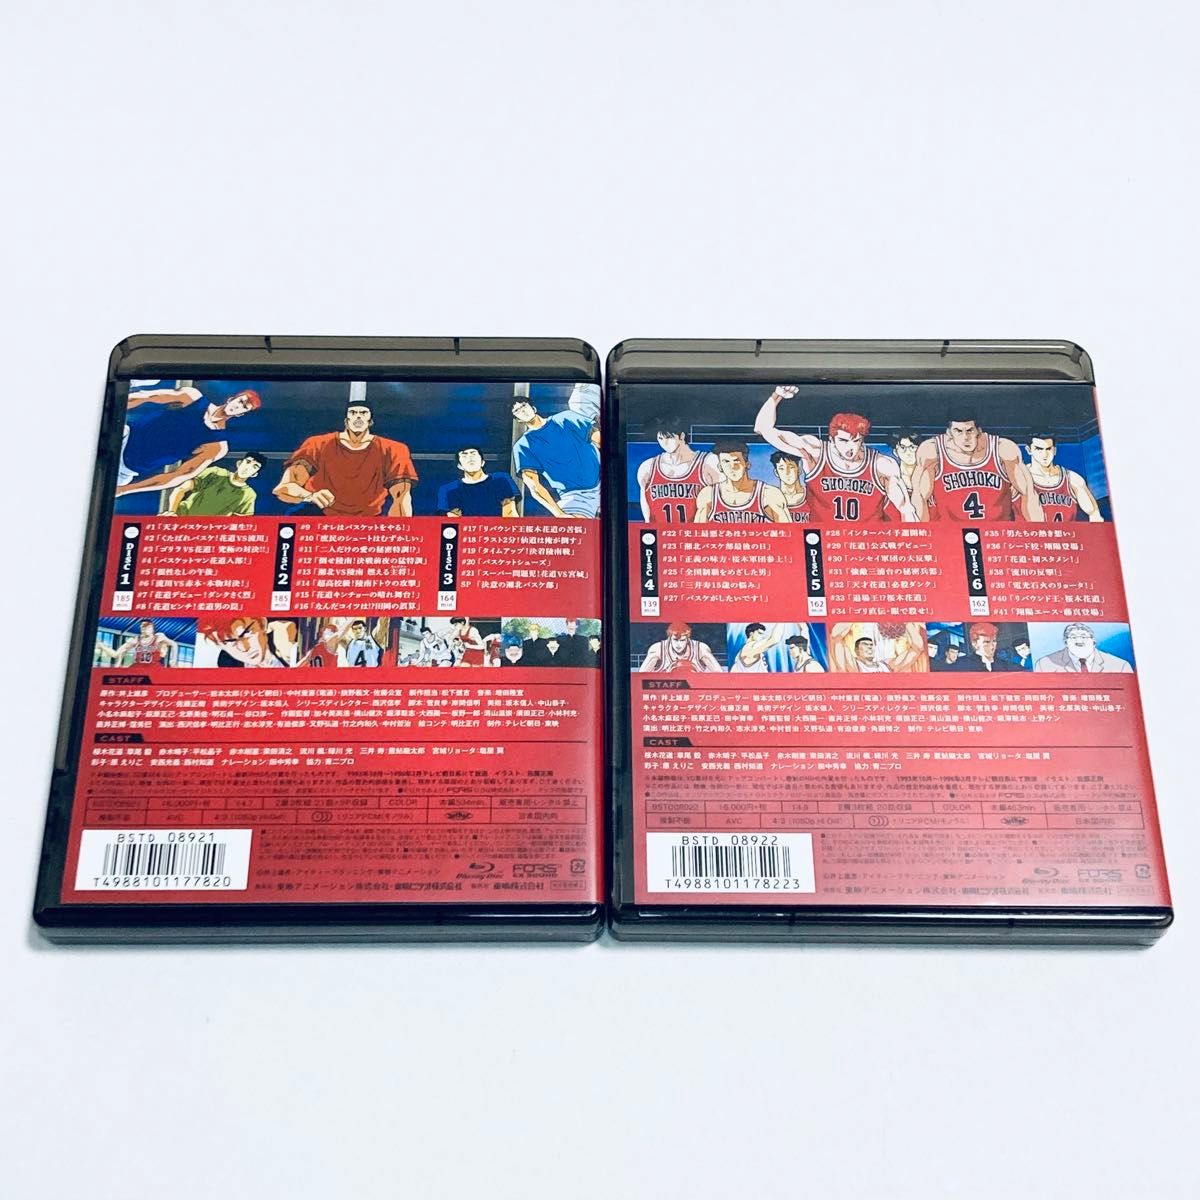 SLAM DUNK スラムダンク Blu-ray Collection Vol.1〜5 全巻 初回限定特典 全巻収納BOX・帯付き